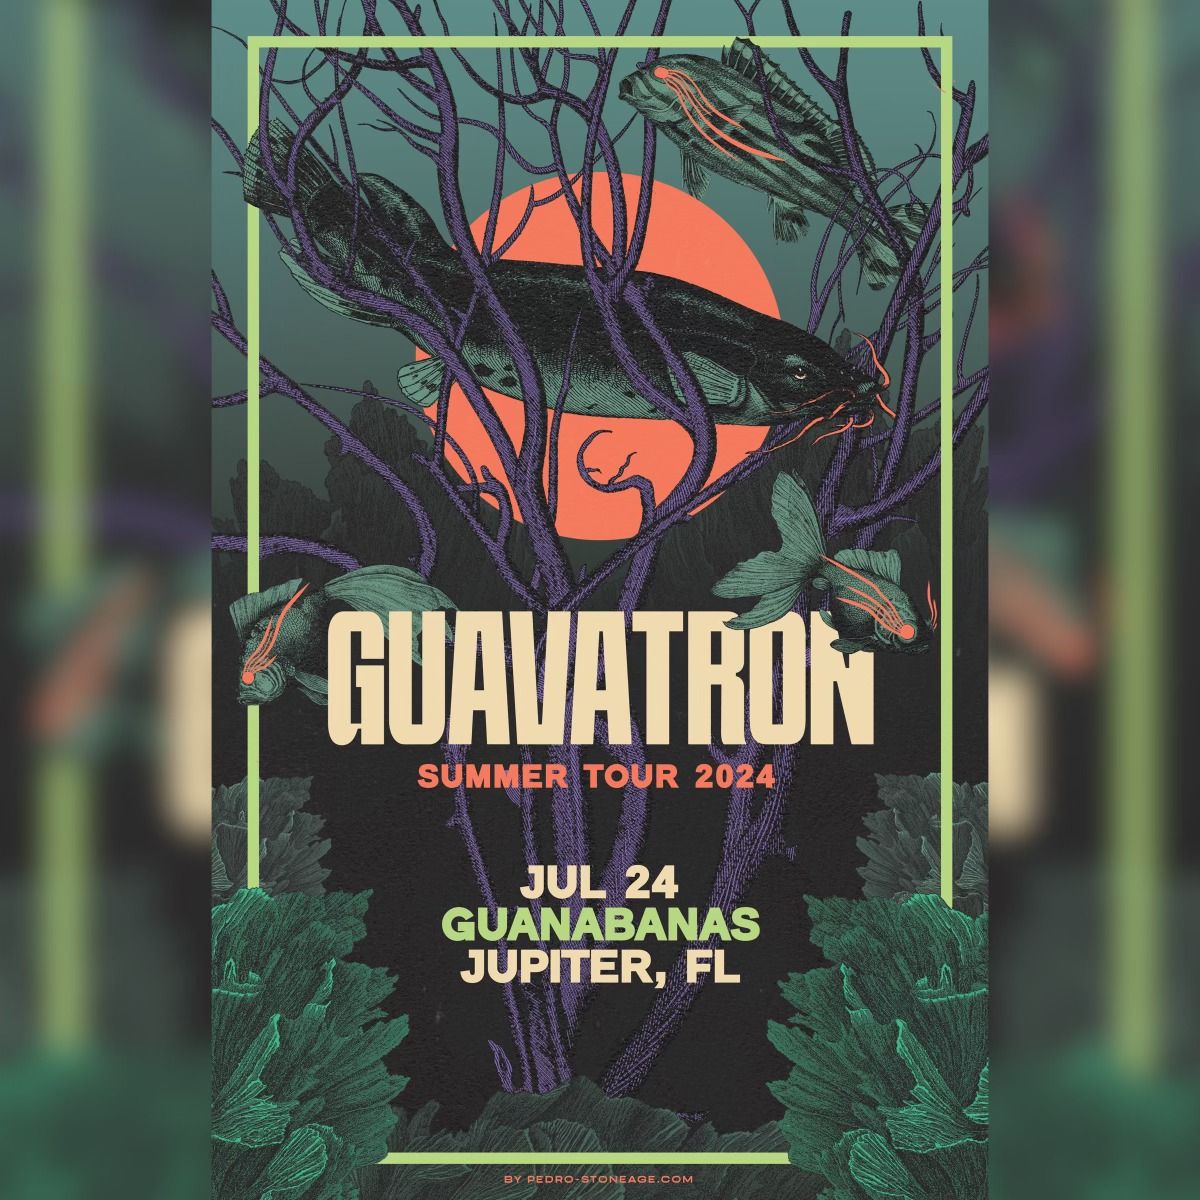 Guavatron live at Guanabanas in Jupiter.